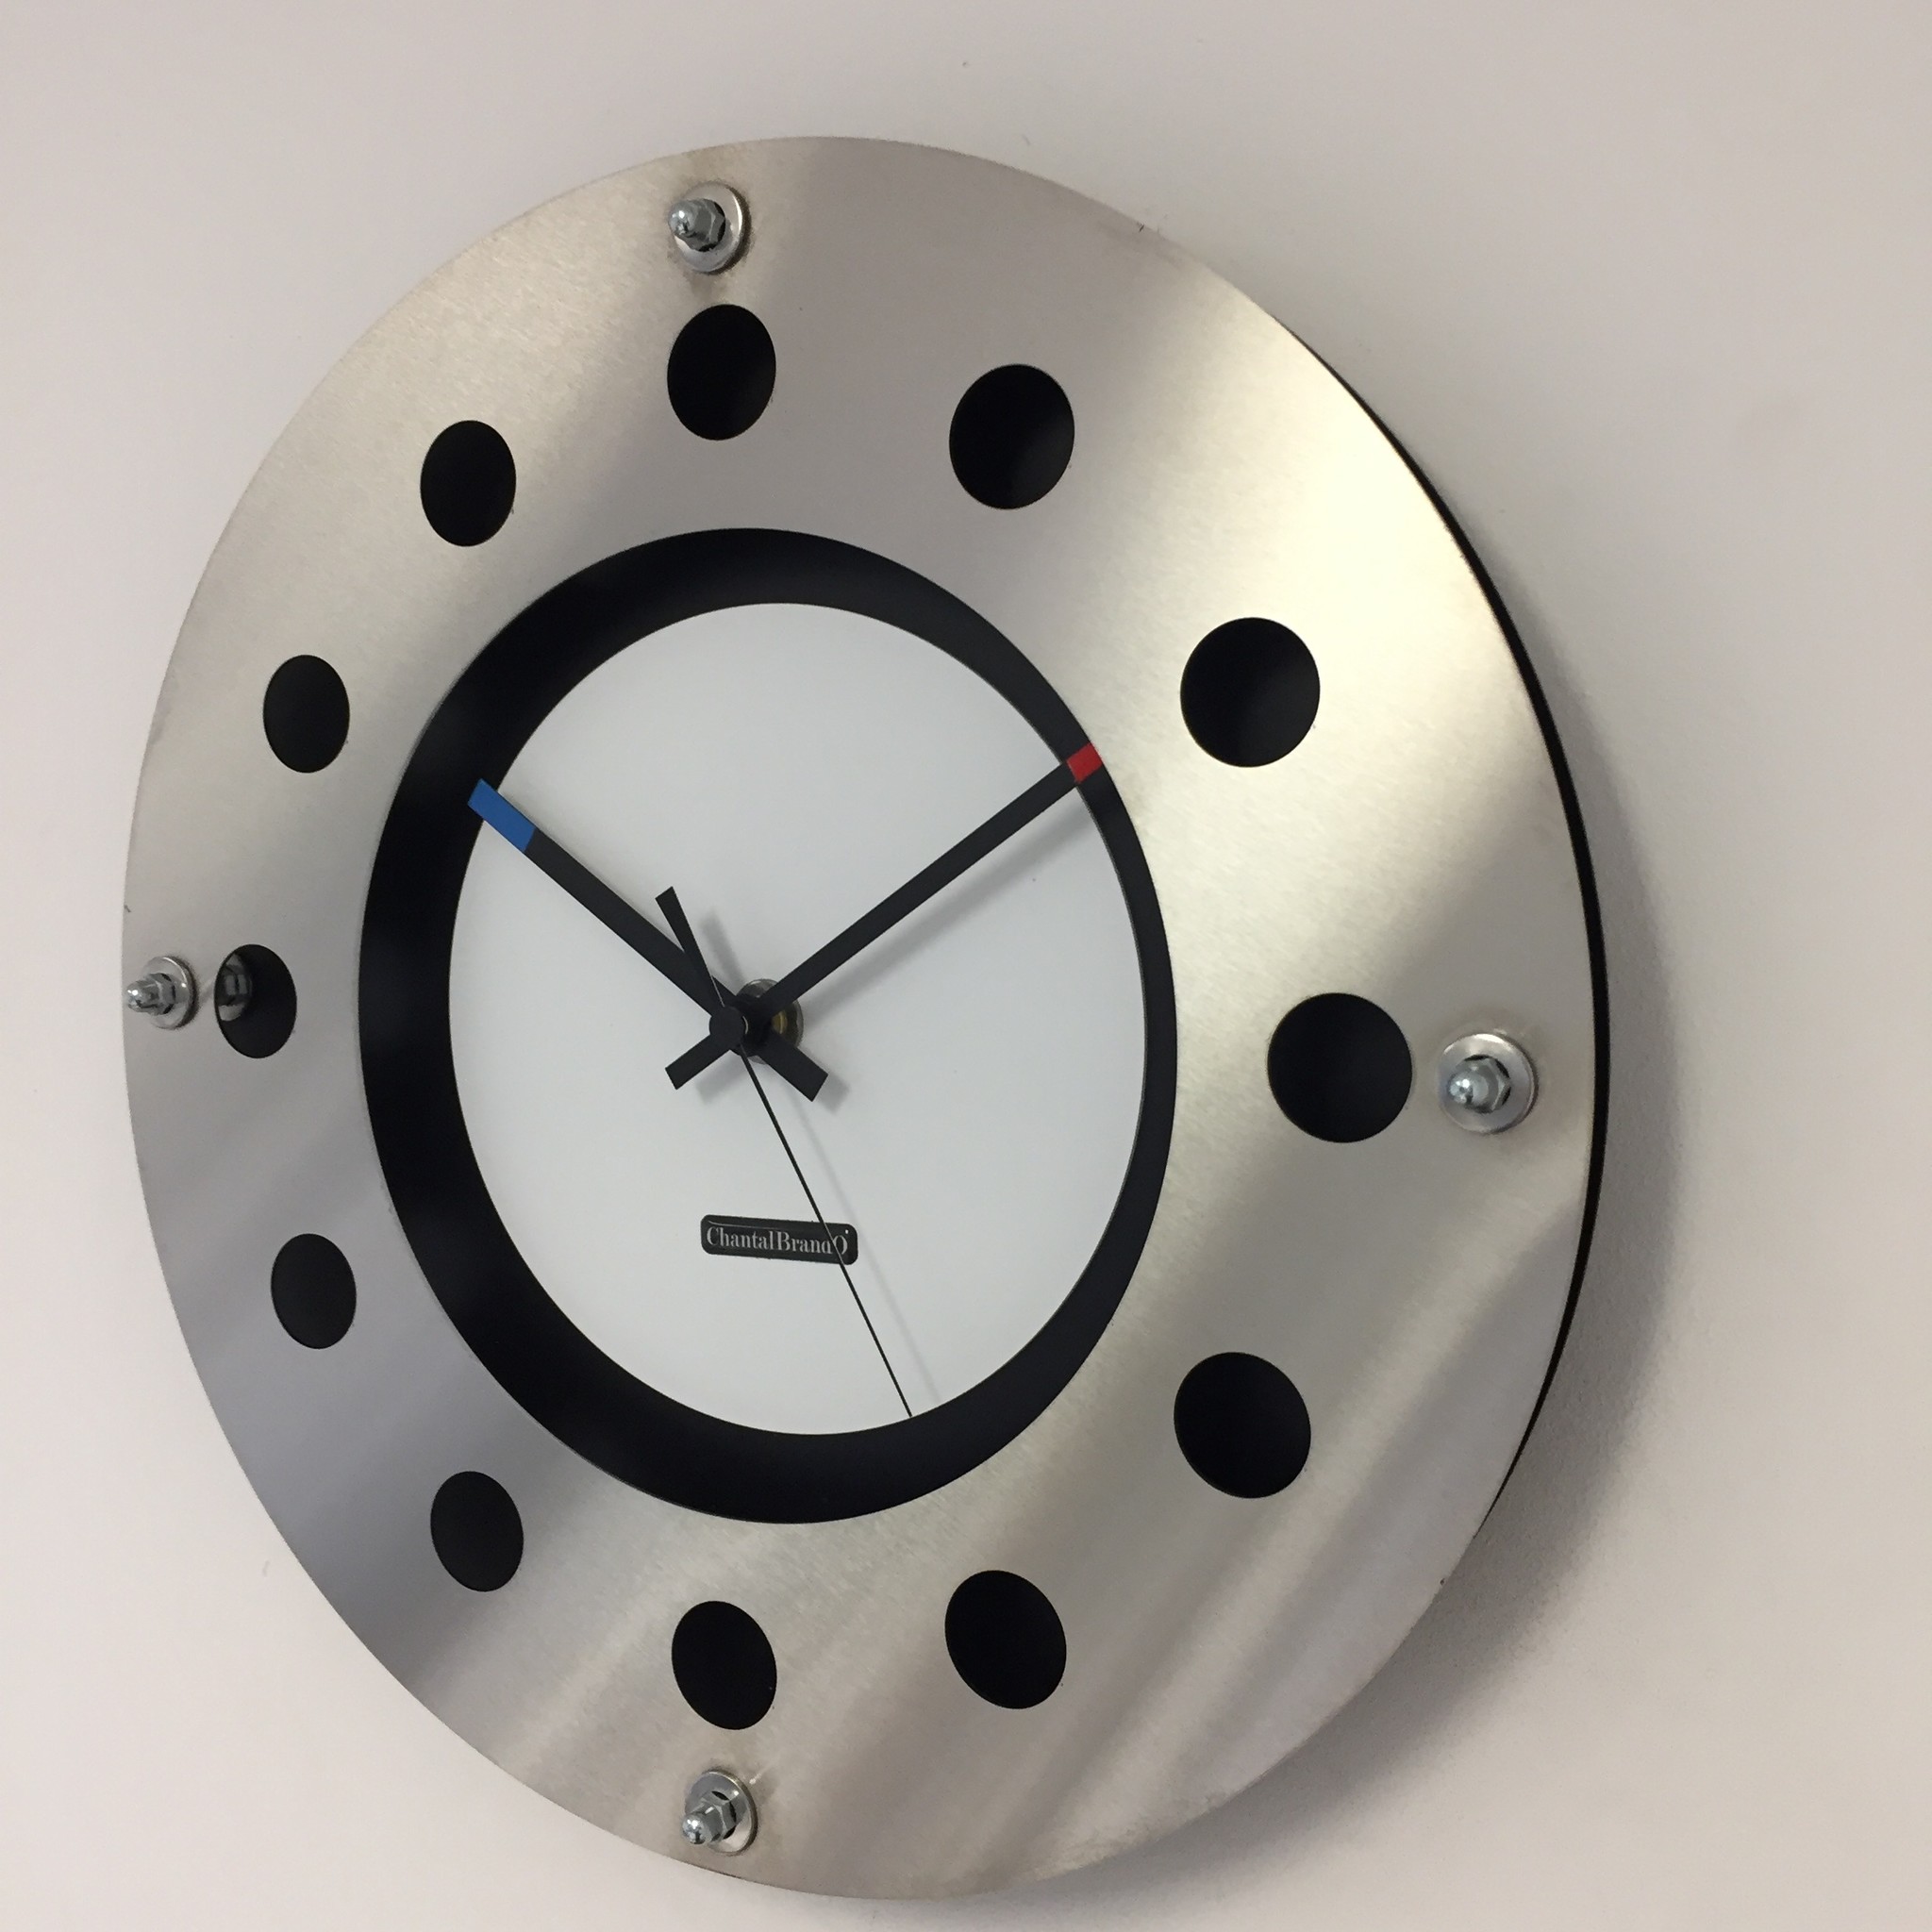 ChantalBrandO Design - Wall clock Mecanica Fully Black With White Color Small Inside Circle Rood Blue Black Pointer Modern Dutch Design Handmade 40 cm